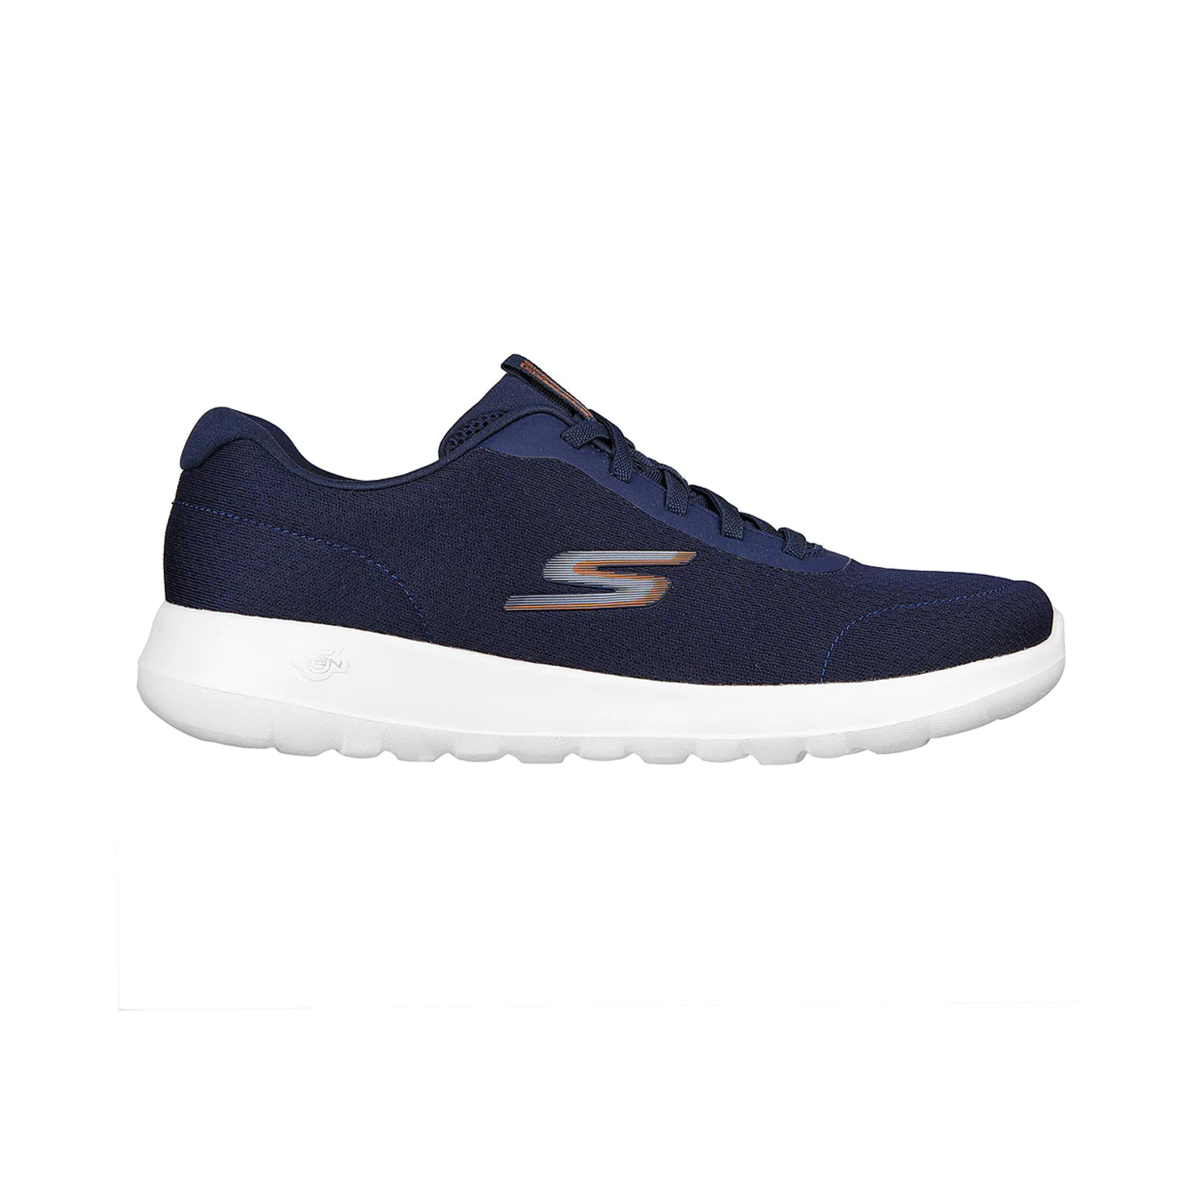 Skechers Go Walk Max Midshore Shoes For Men, Navy & Orange